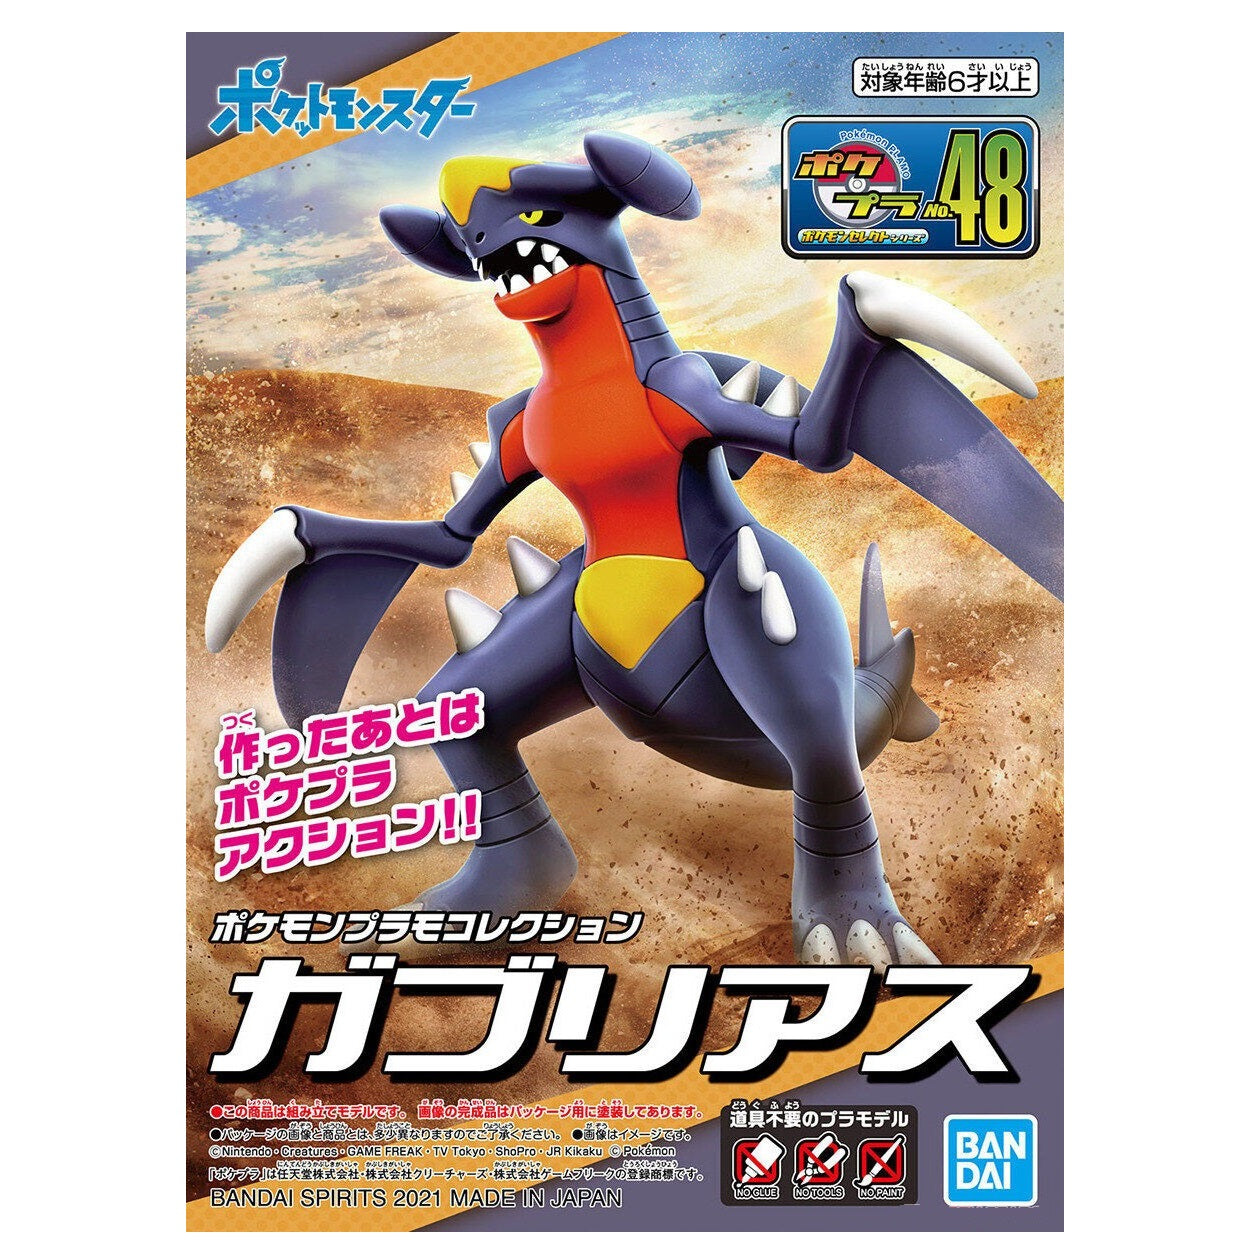 Pokémon Garchomp/Carchacrok model kits